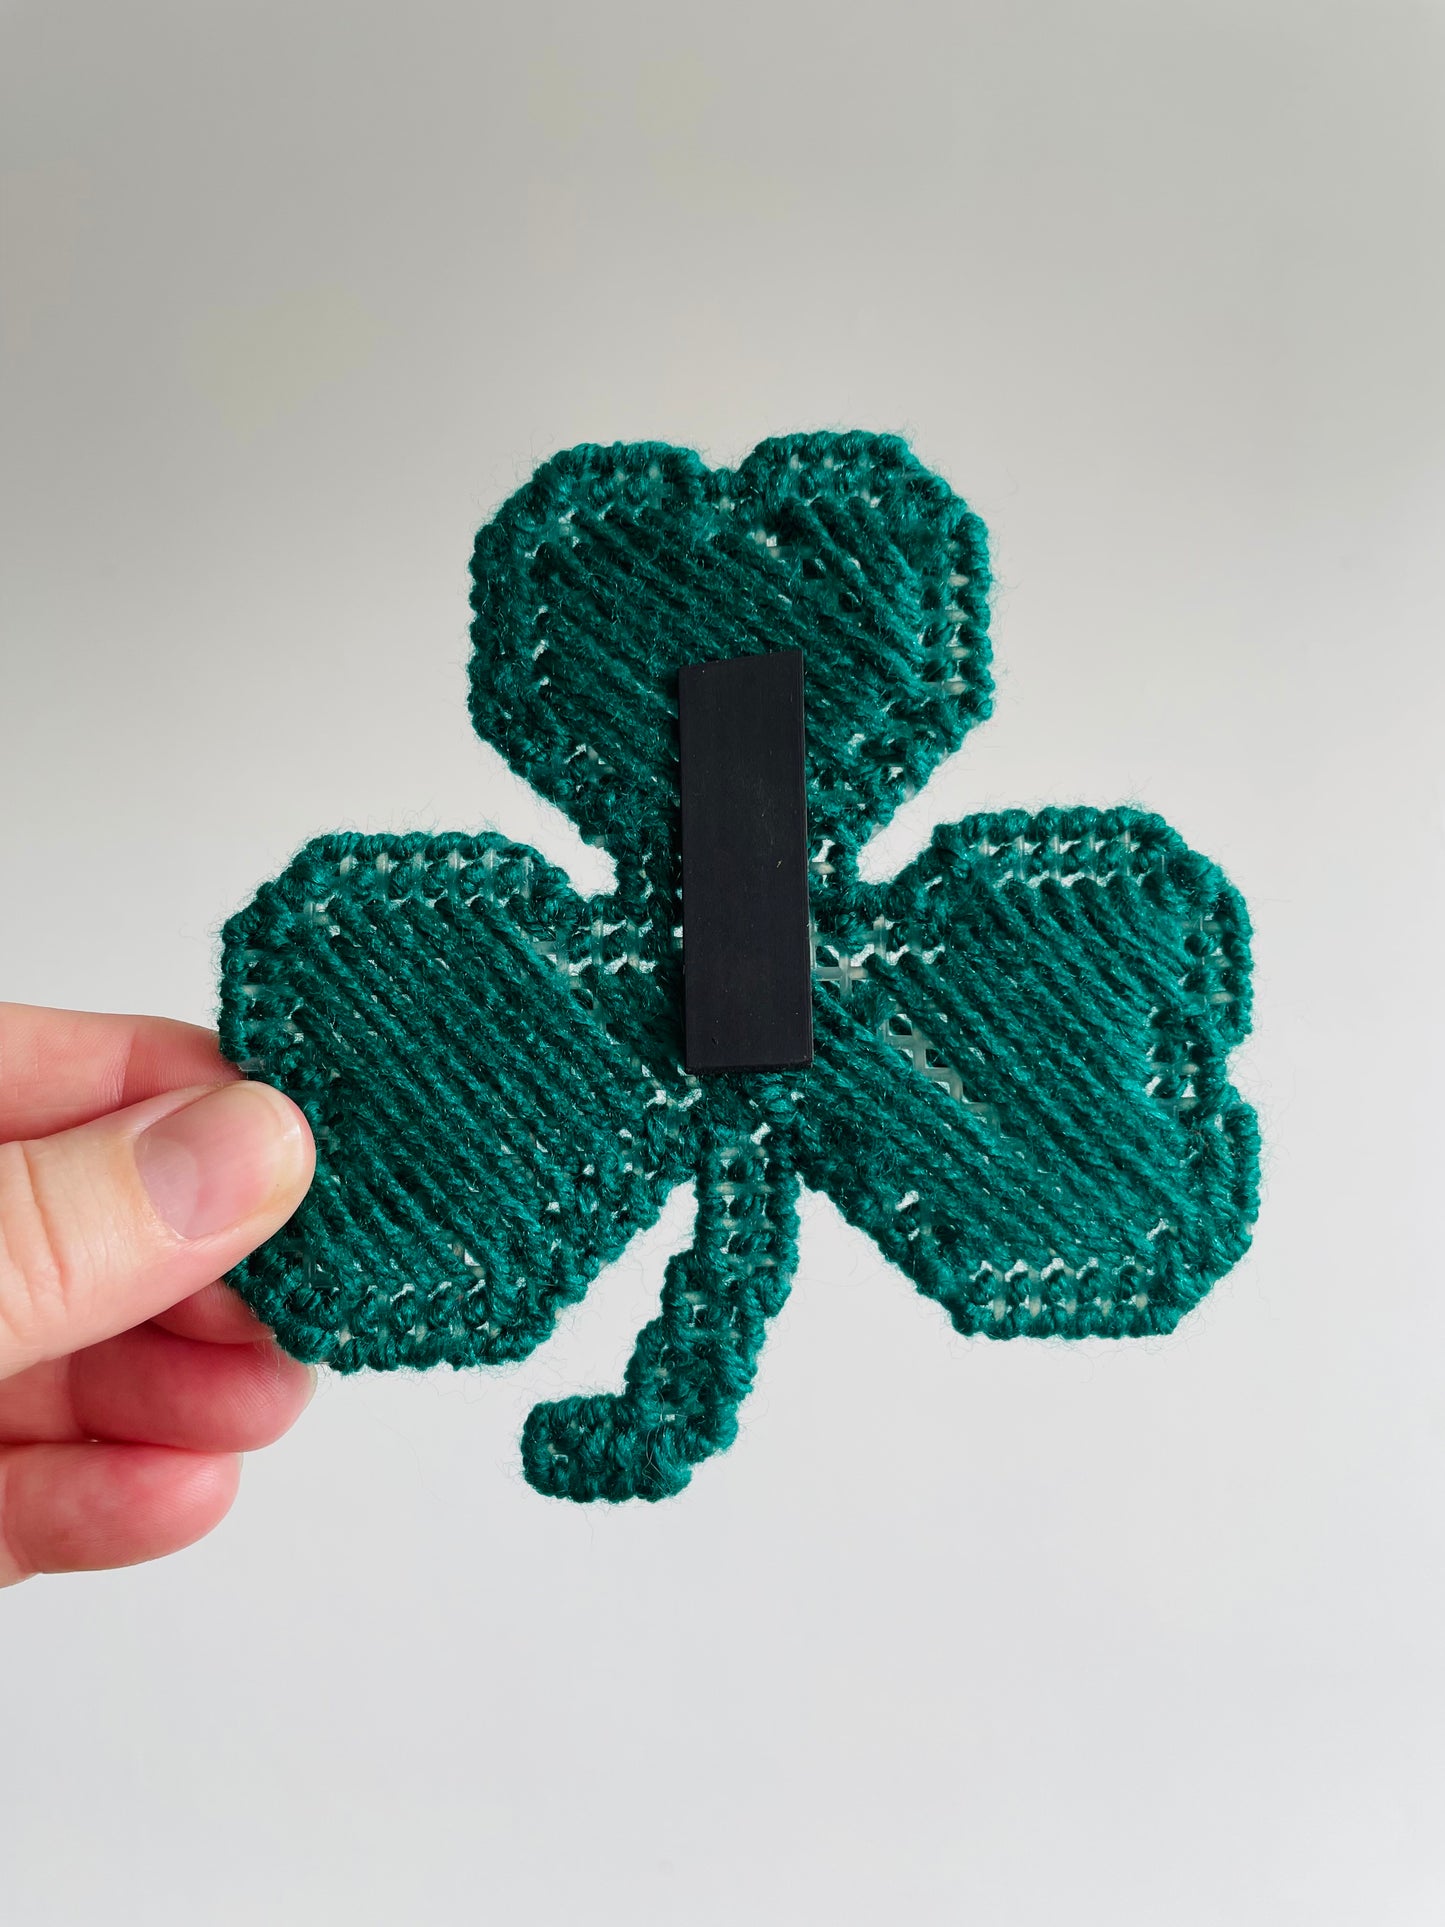 St. Patrick's Day Holiday Plastic Canvas Art Decoration - Shamrock Magnet